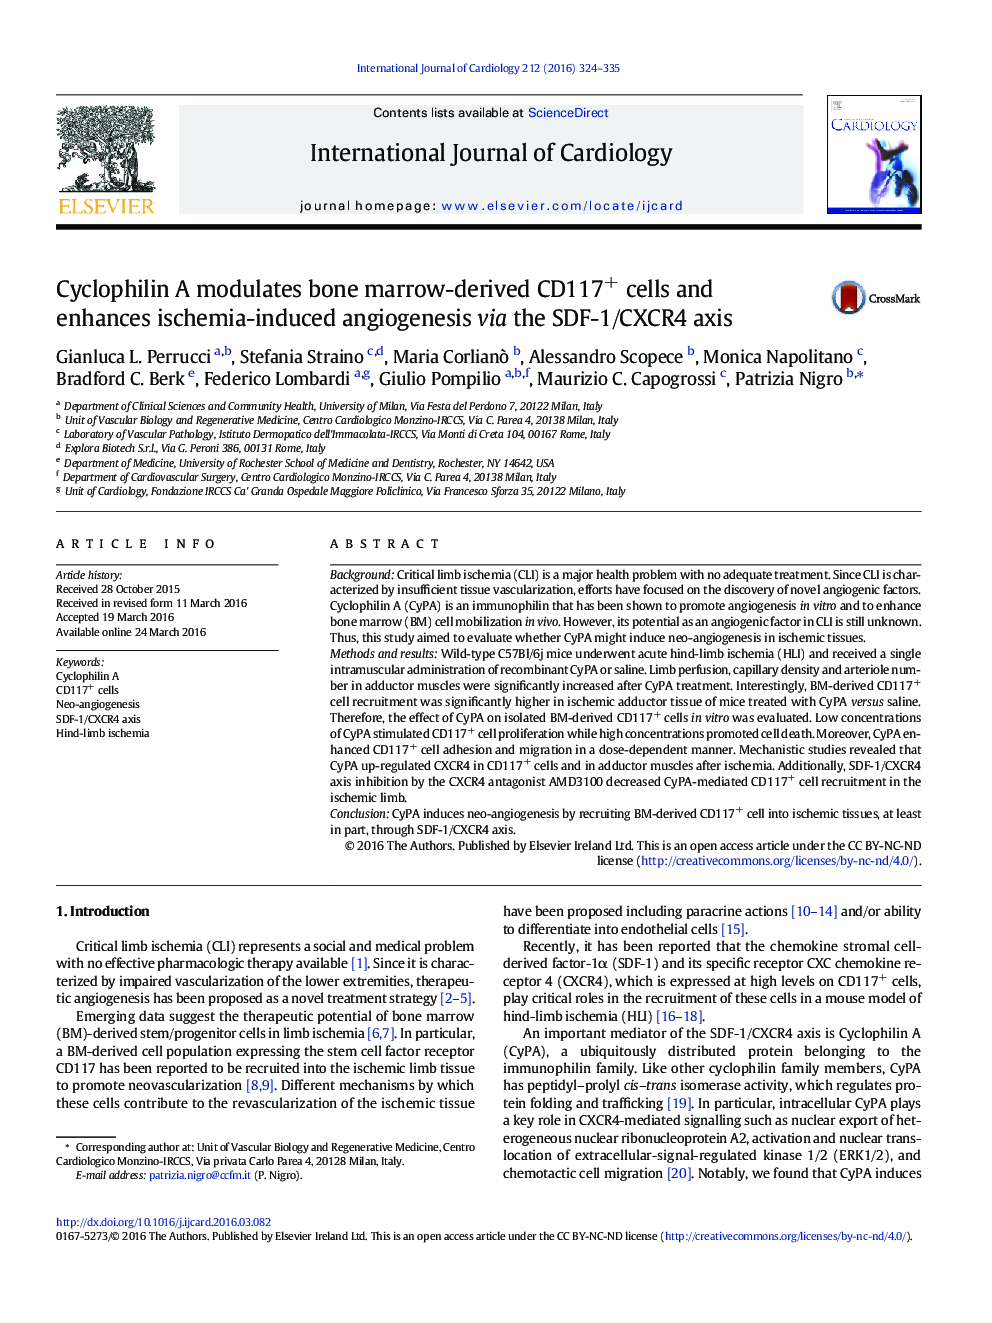 Cyclophilin A modulates bone marrow-derived CD117+ cells and enhances ischemia-induced angiogenesis via the SDF-1/CXCR4 axis